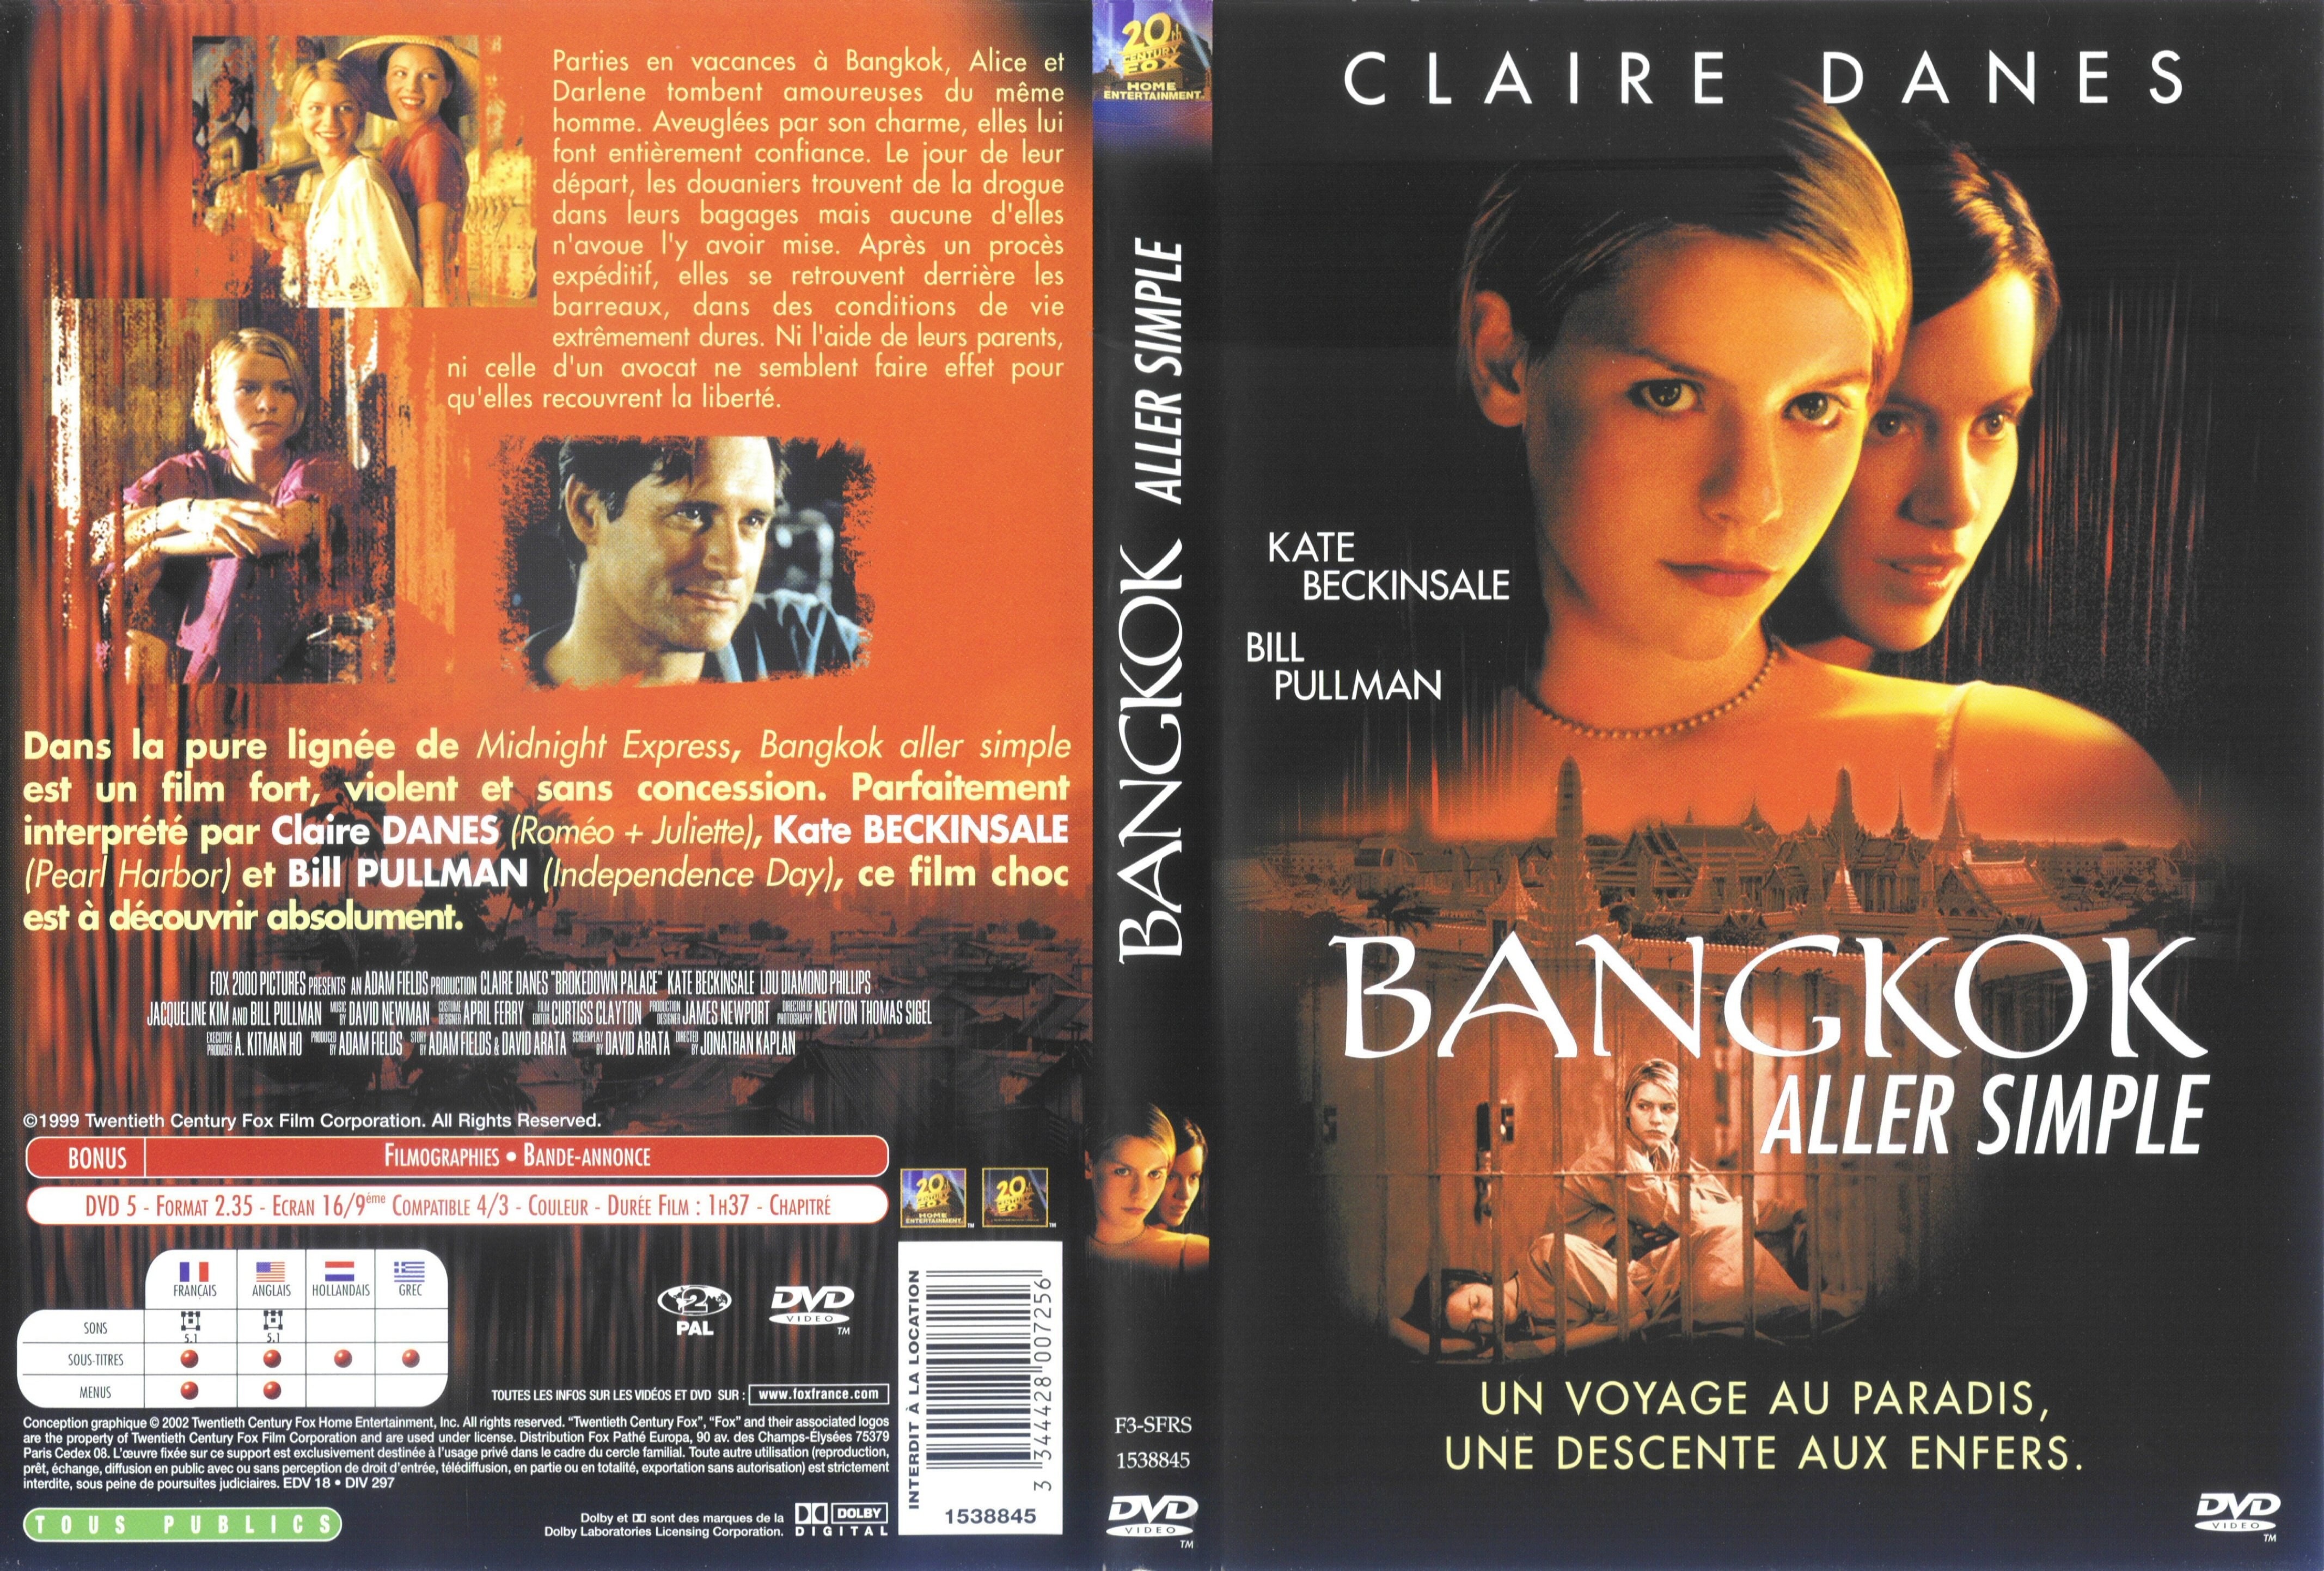 Jaquette DVD Bangkok aller simple